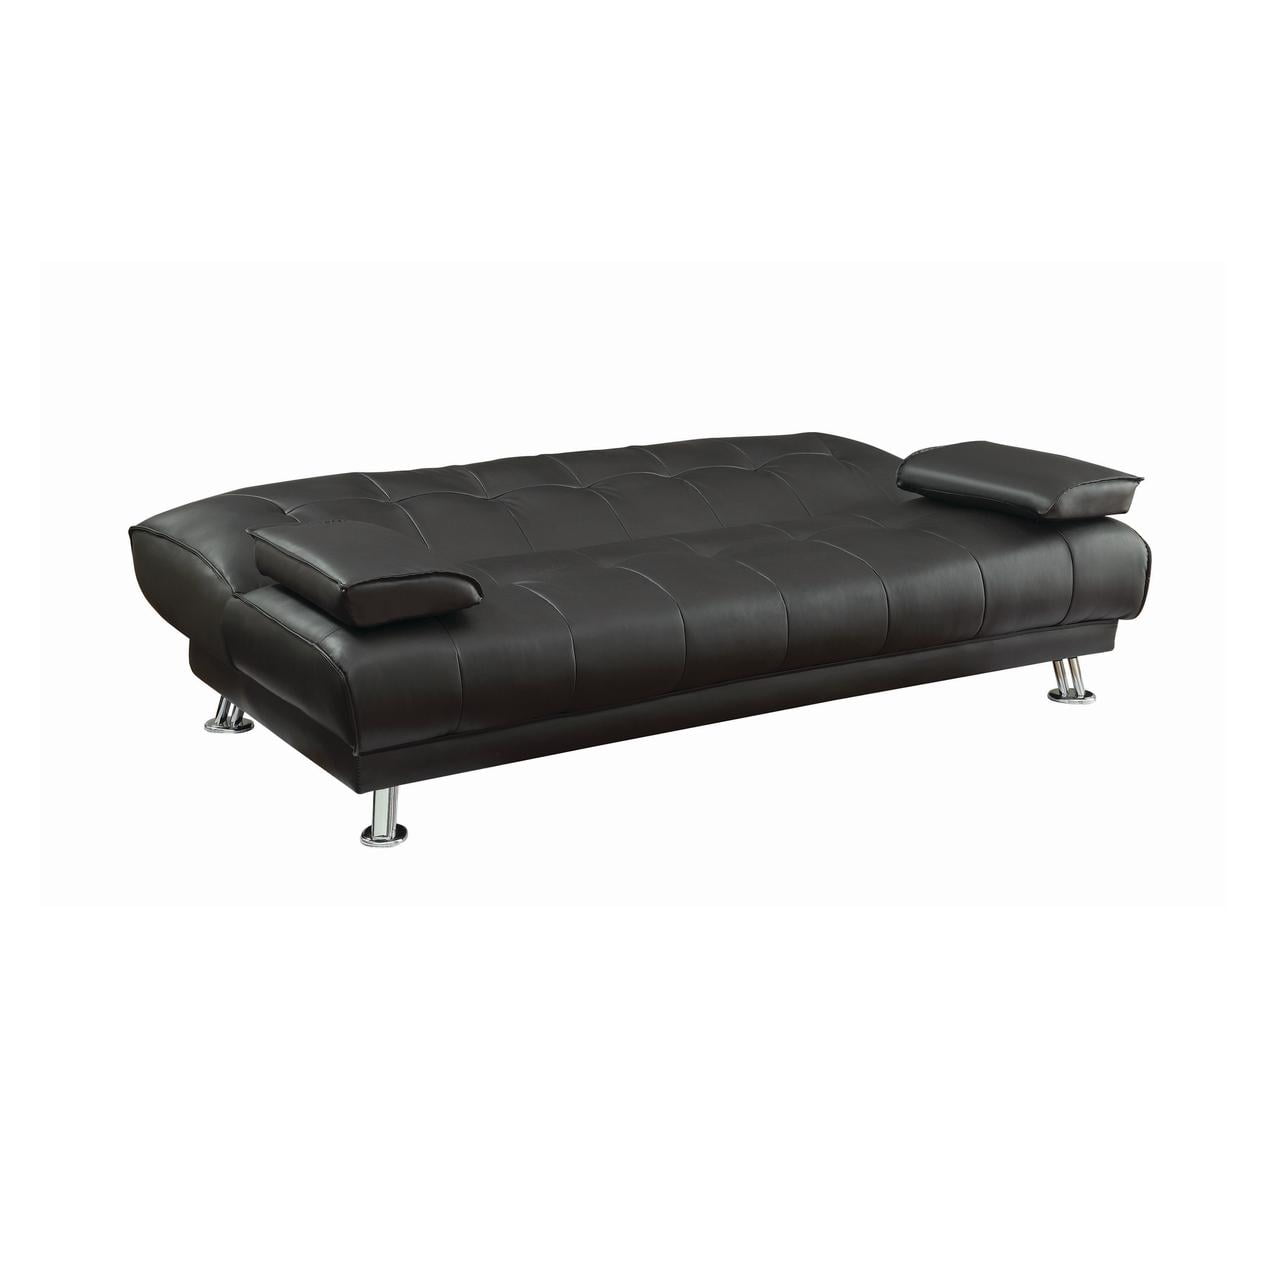 Braxton Leatherette Sofa Bed, Black - Walmart.com